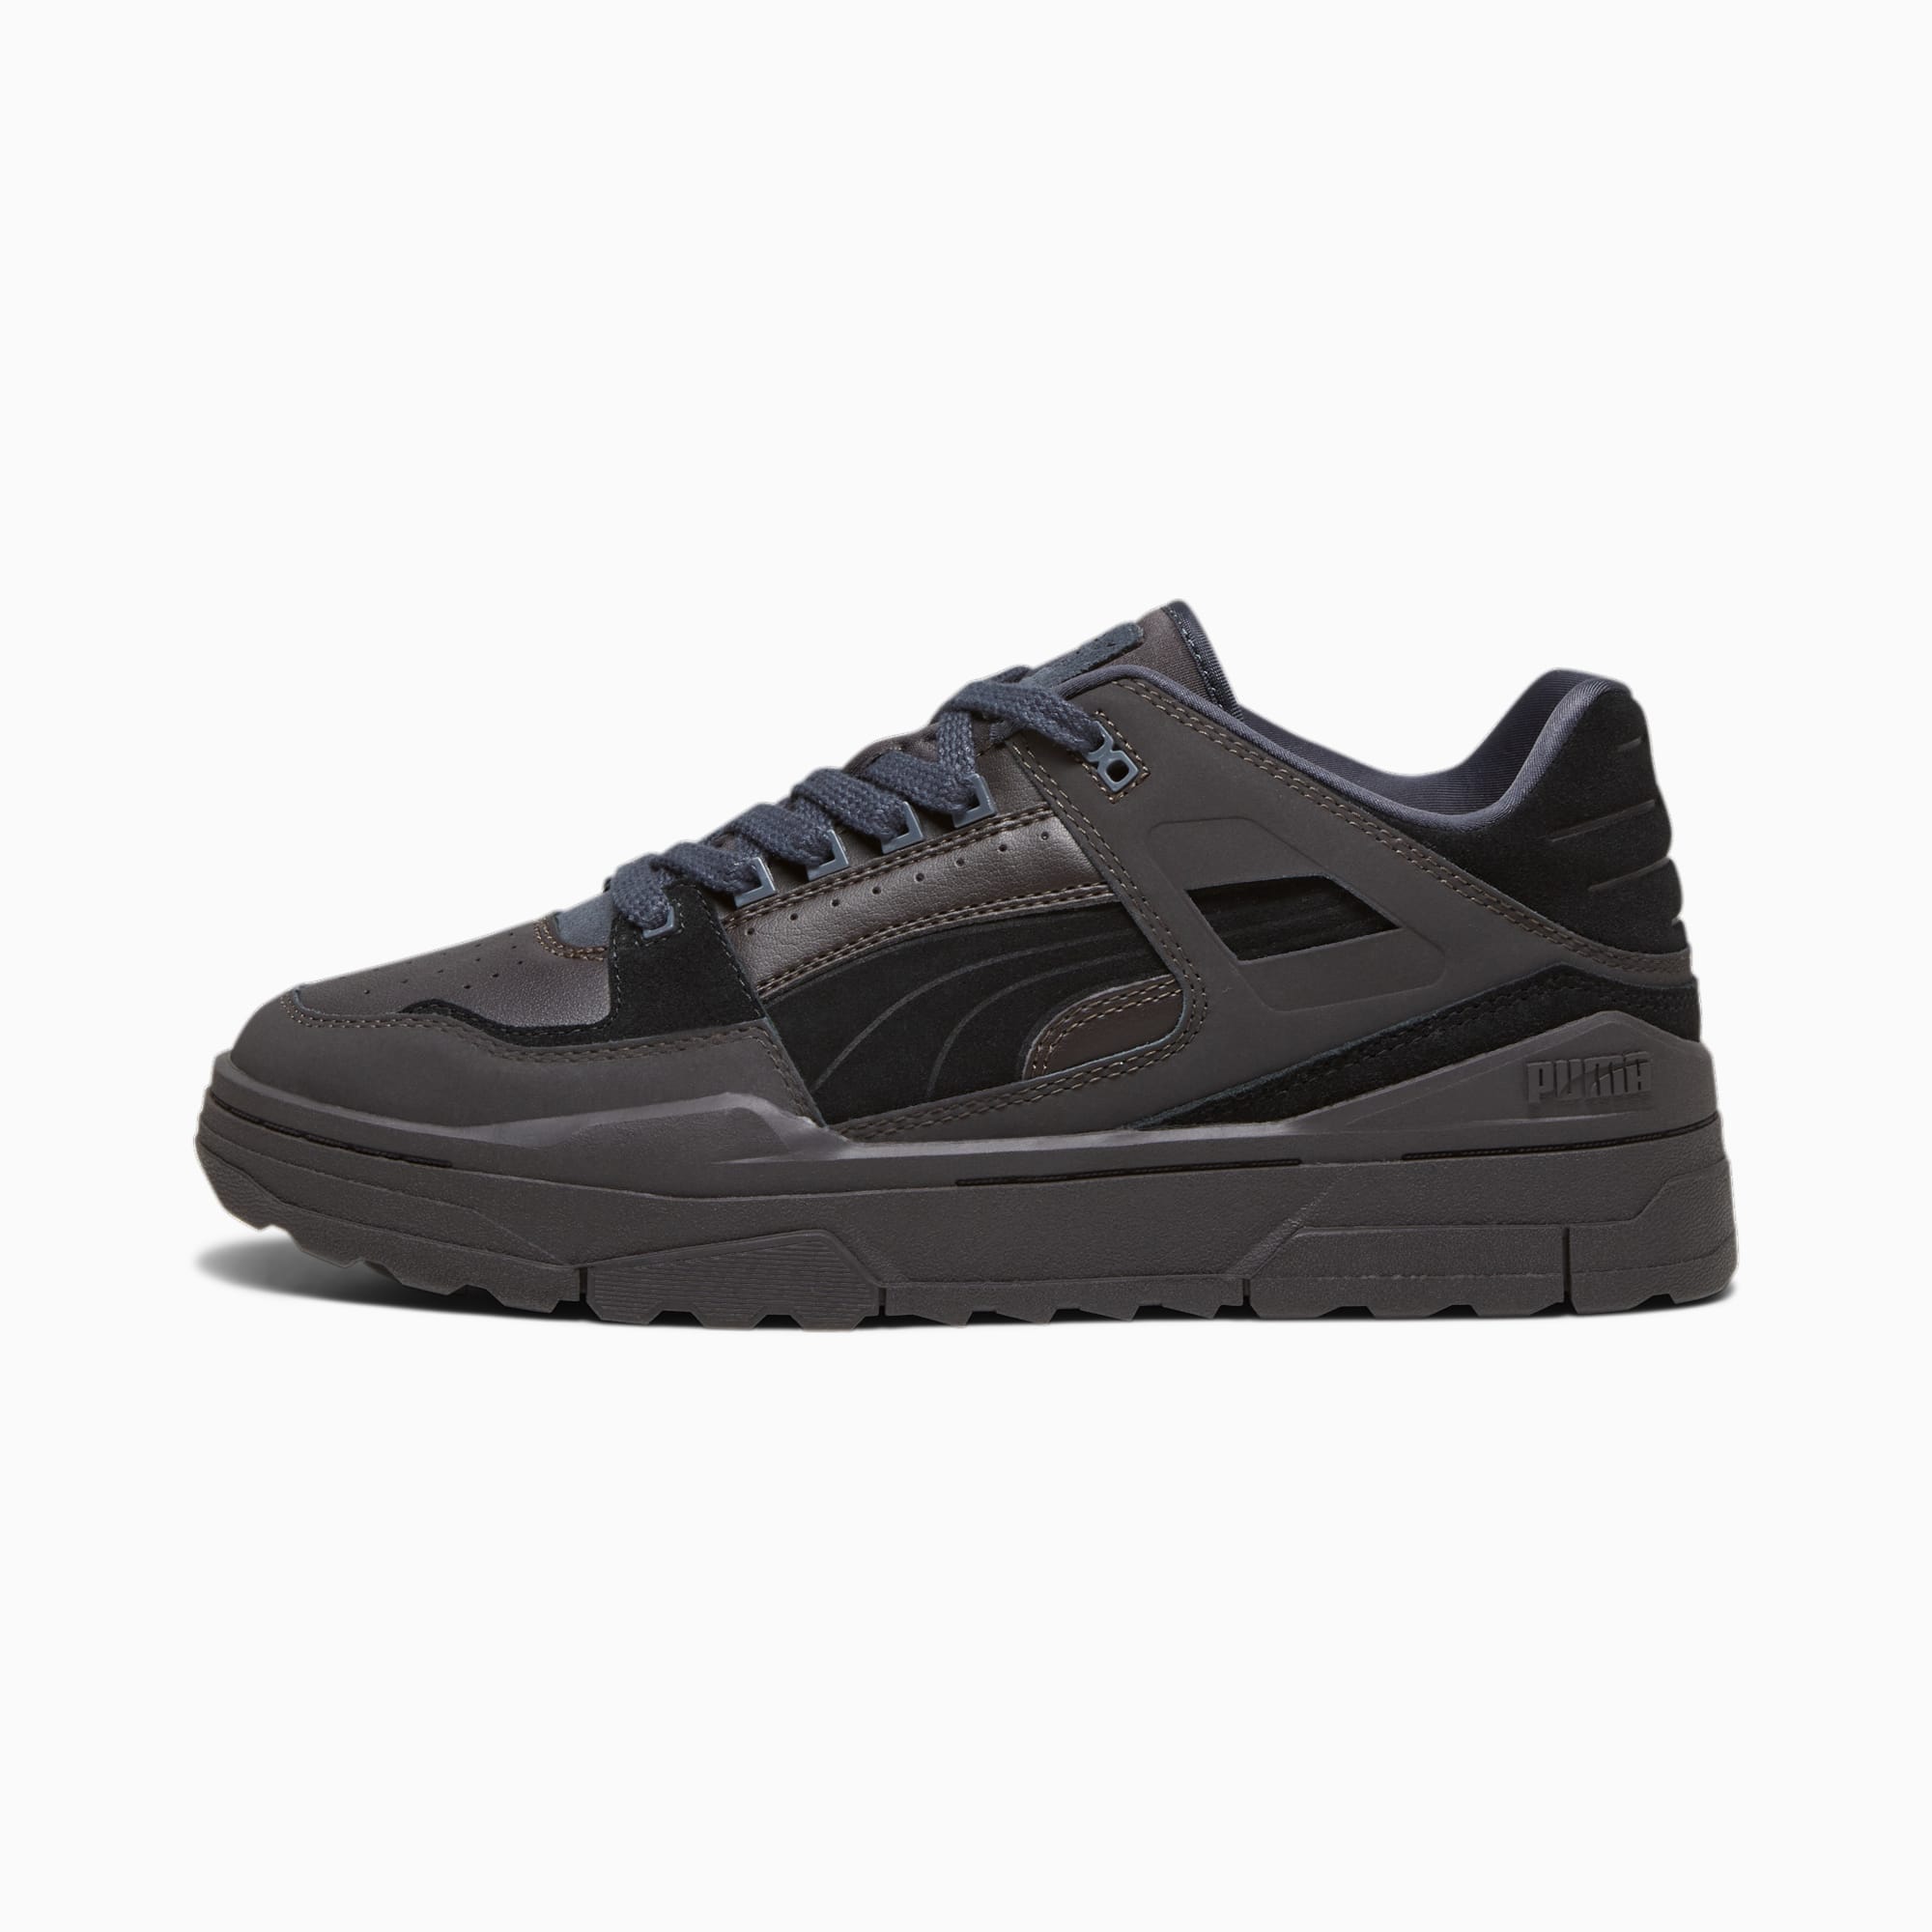 Women's PUMA Slipstream Xtreme Sneakers, Black/Flat Dark Grey/Strongray, Size 40,5, Shoes